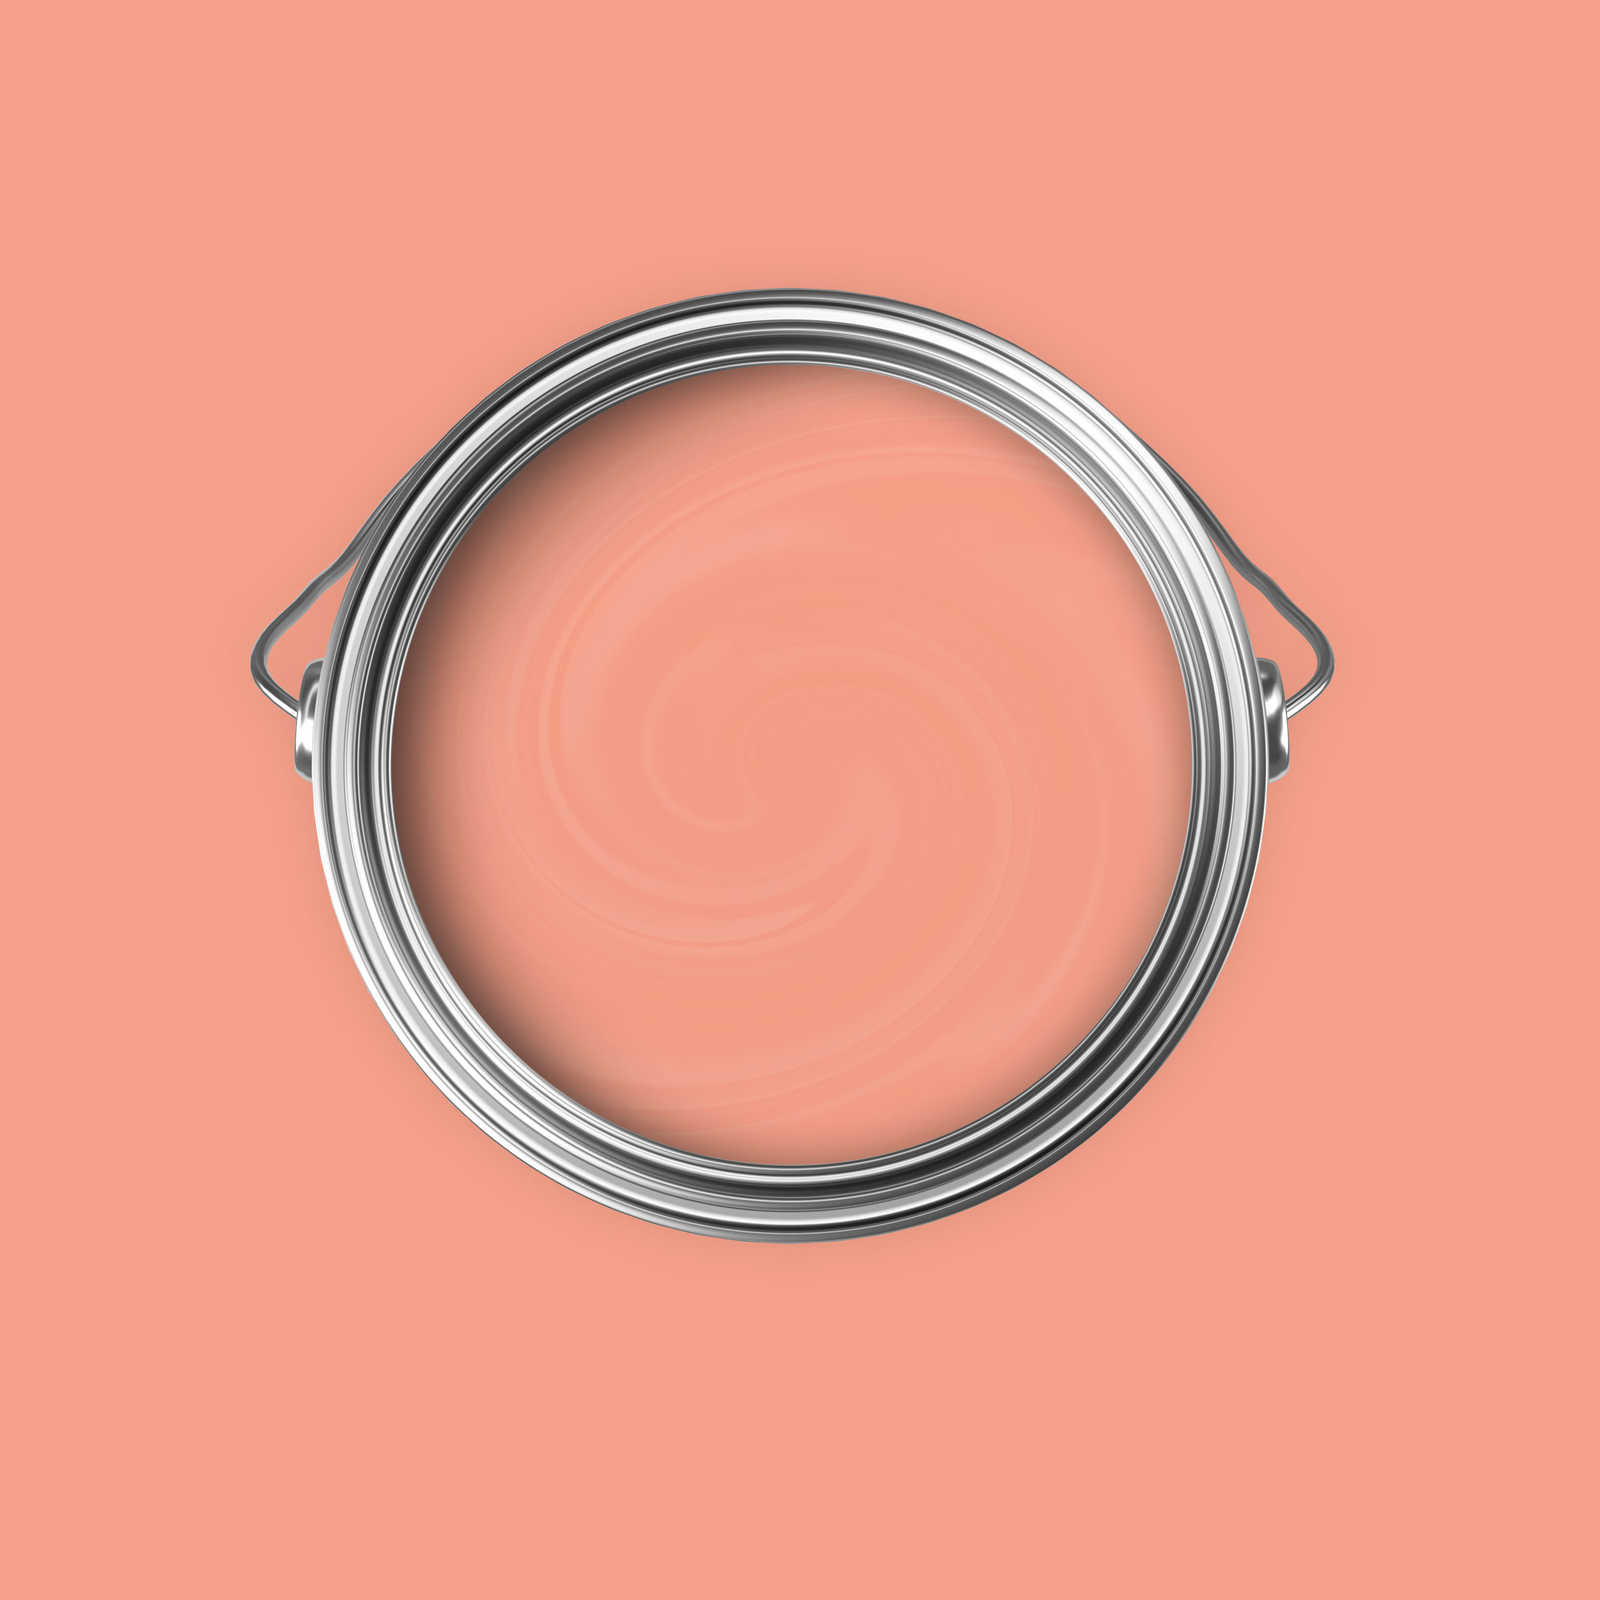             Premium Wandfarbe harmonisches Lachs »Active Apricot« NW914 – 5 Liter
        